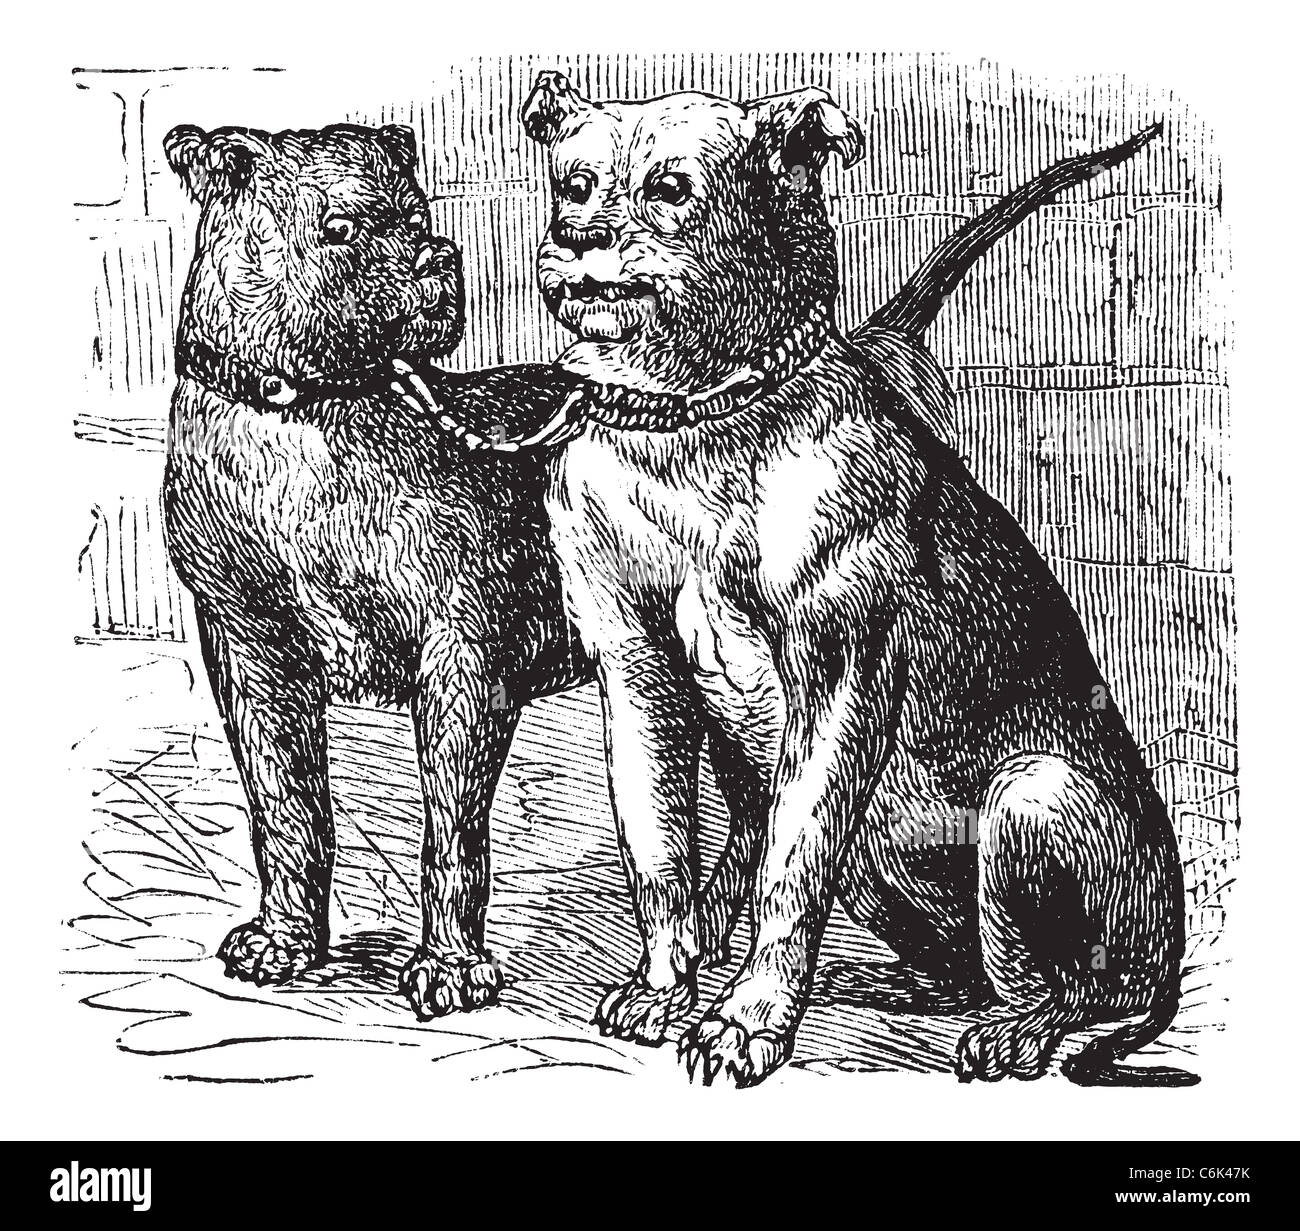 Bulldog or English Bulldog or Canis lupus familiaris, vintage engraving. Old engraved illustration of Bulldog. Stock Photo